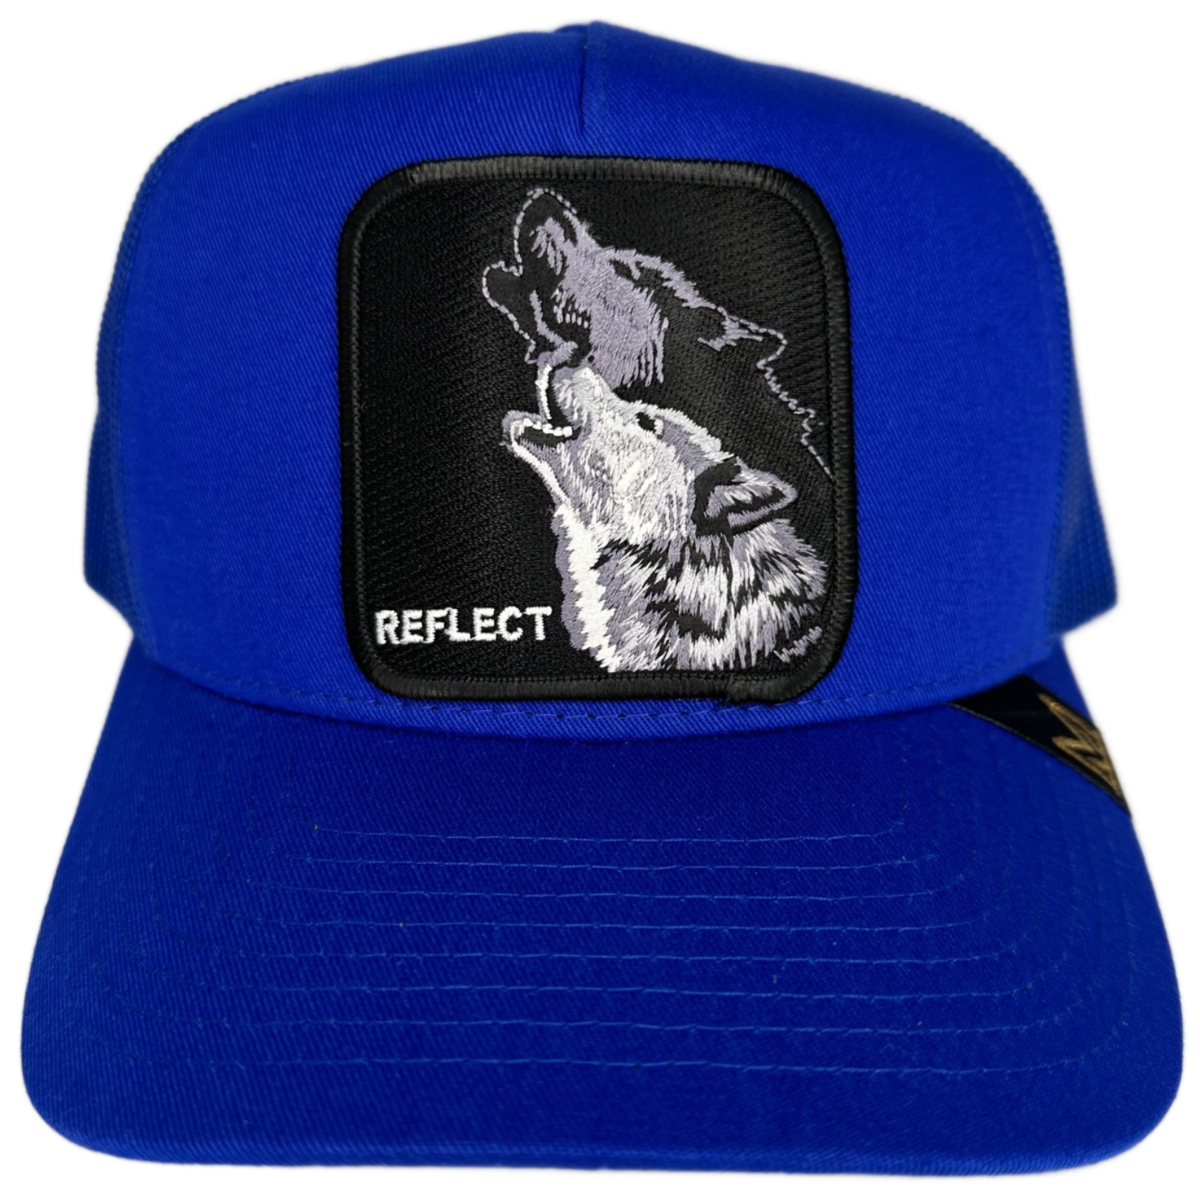 MV Dad Hats - Reflect Trucker Hat - Royal Blue/Royal Blue